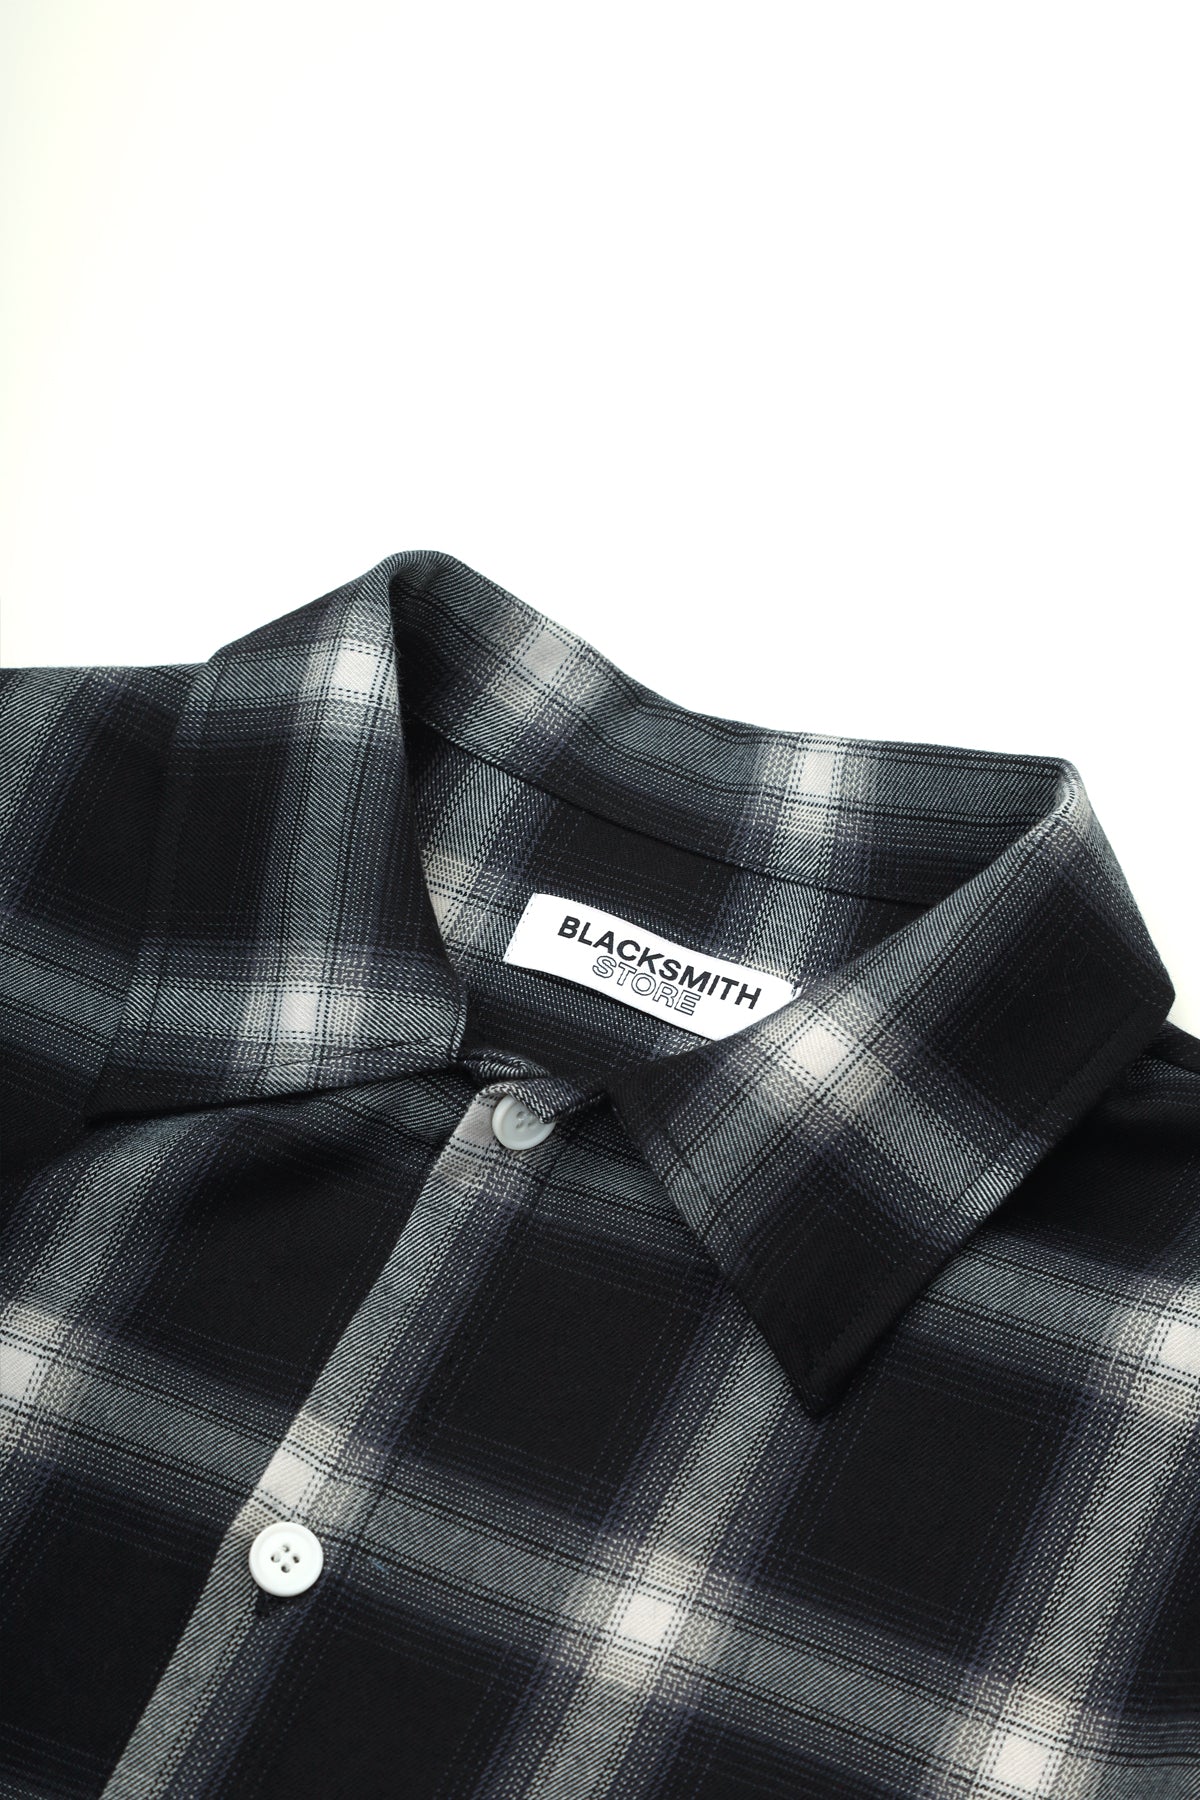 Blacksmith - Shadow Plaid Short Sleeve Shirt - Black/White